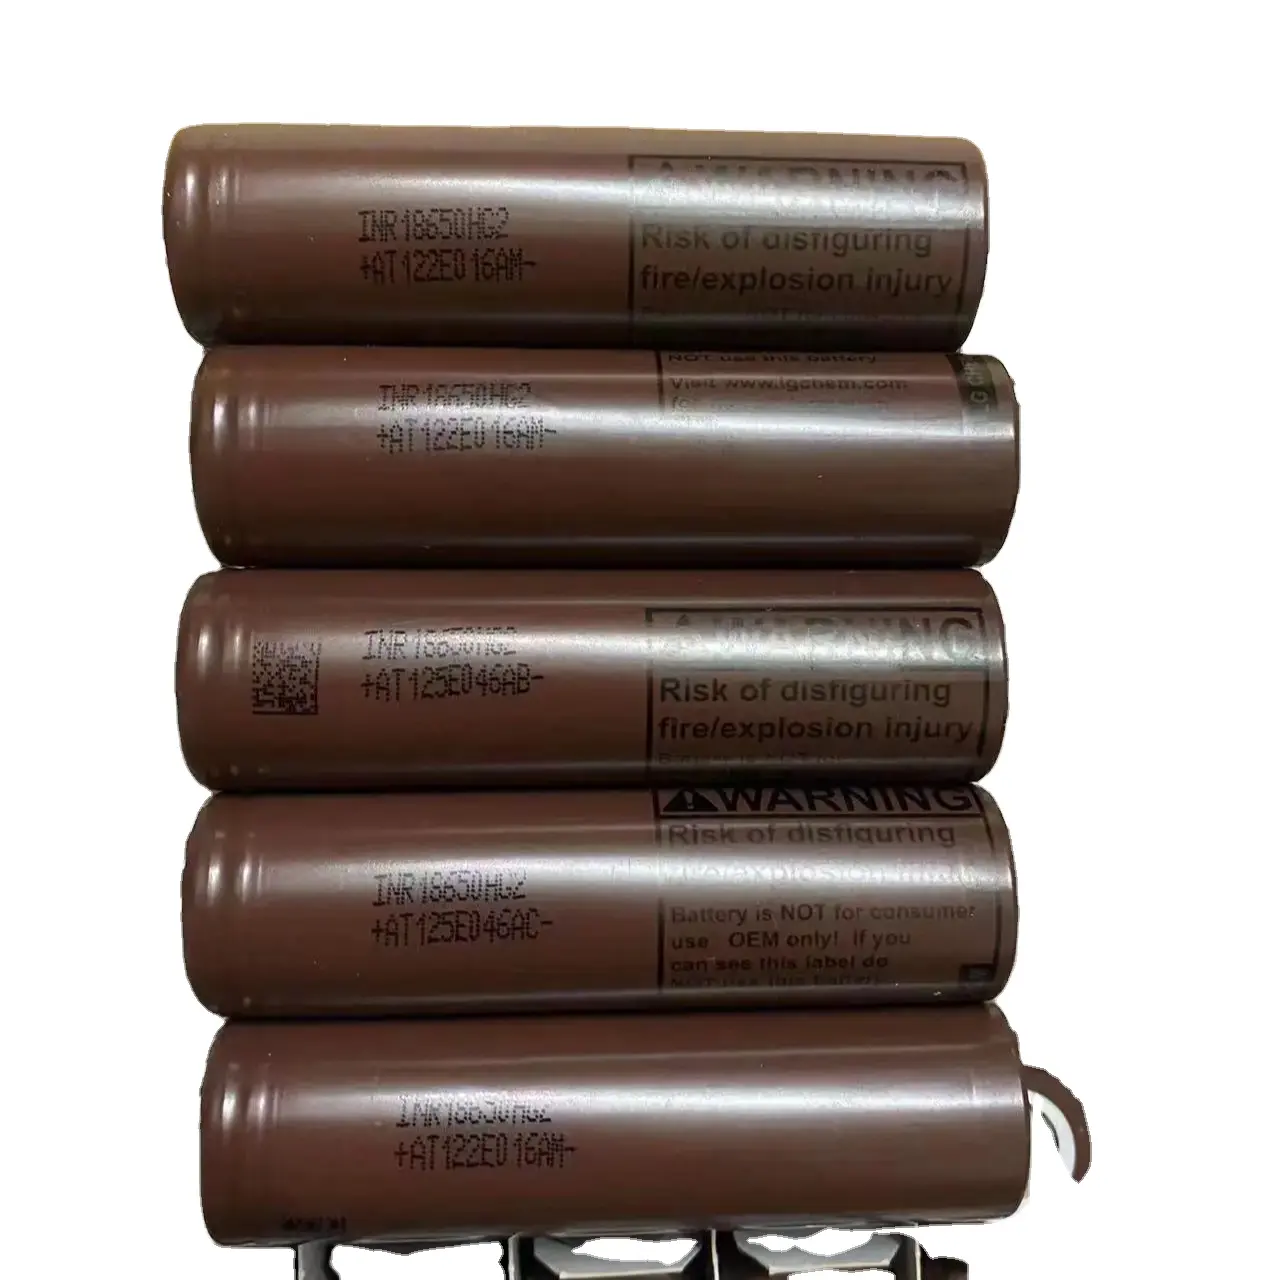 Batterie ricaricabili originali Inr18650hg2 3.7v 3000mah batteria ricaricabile agli ioni di litio per torcia a Led